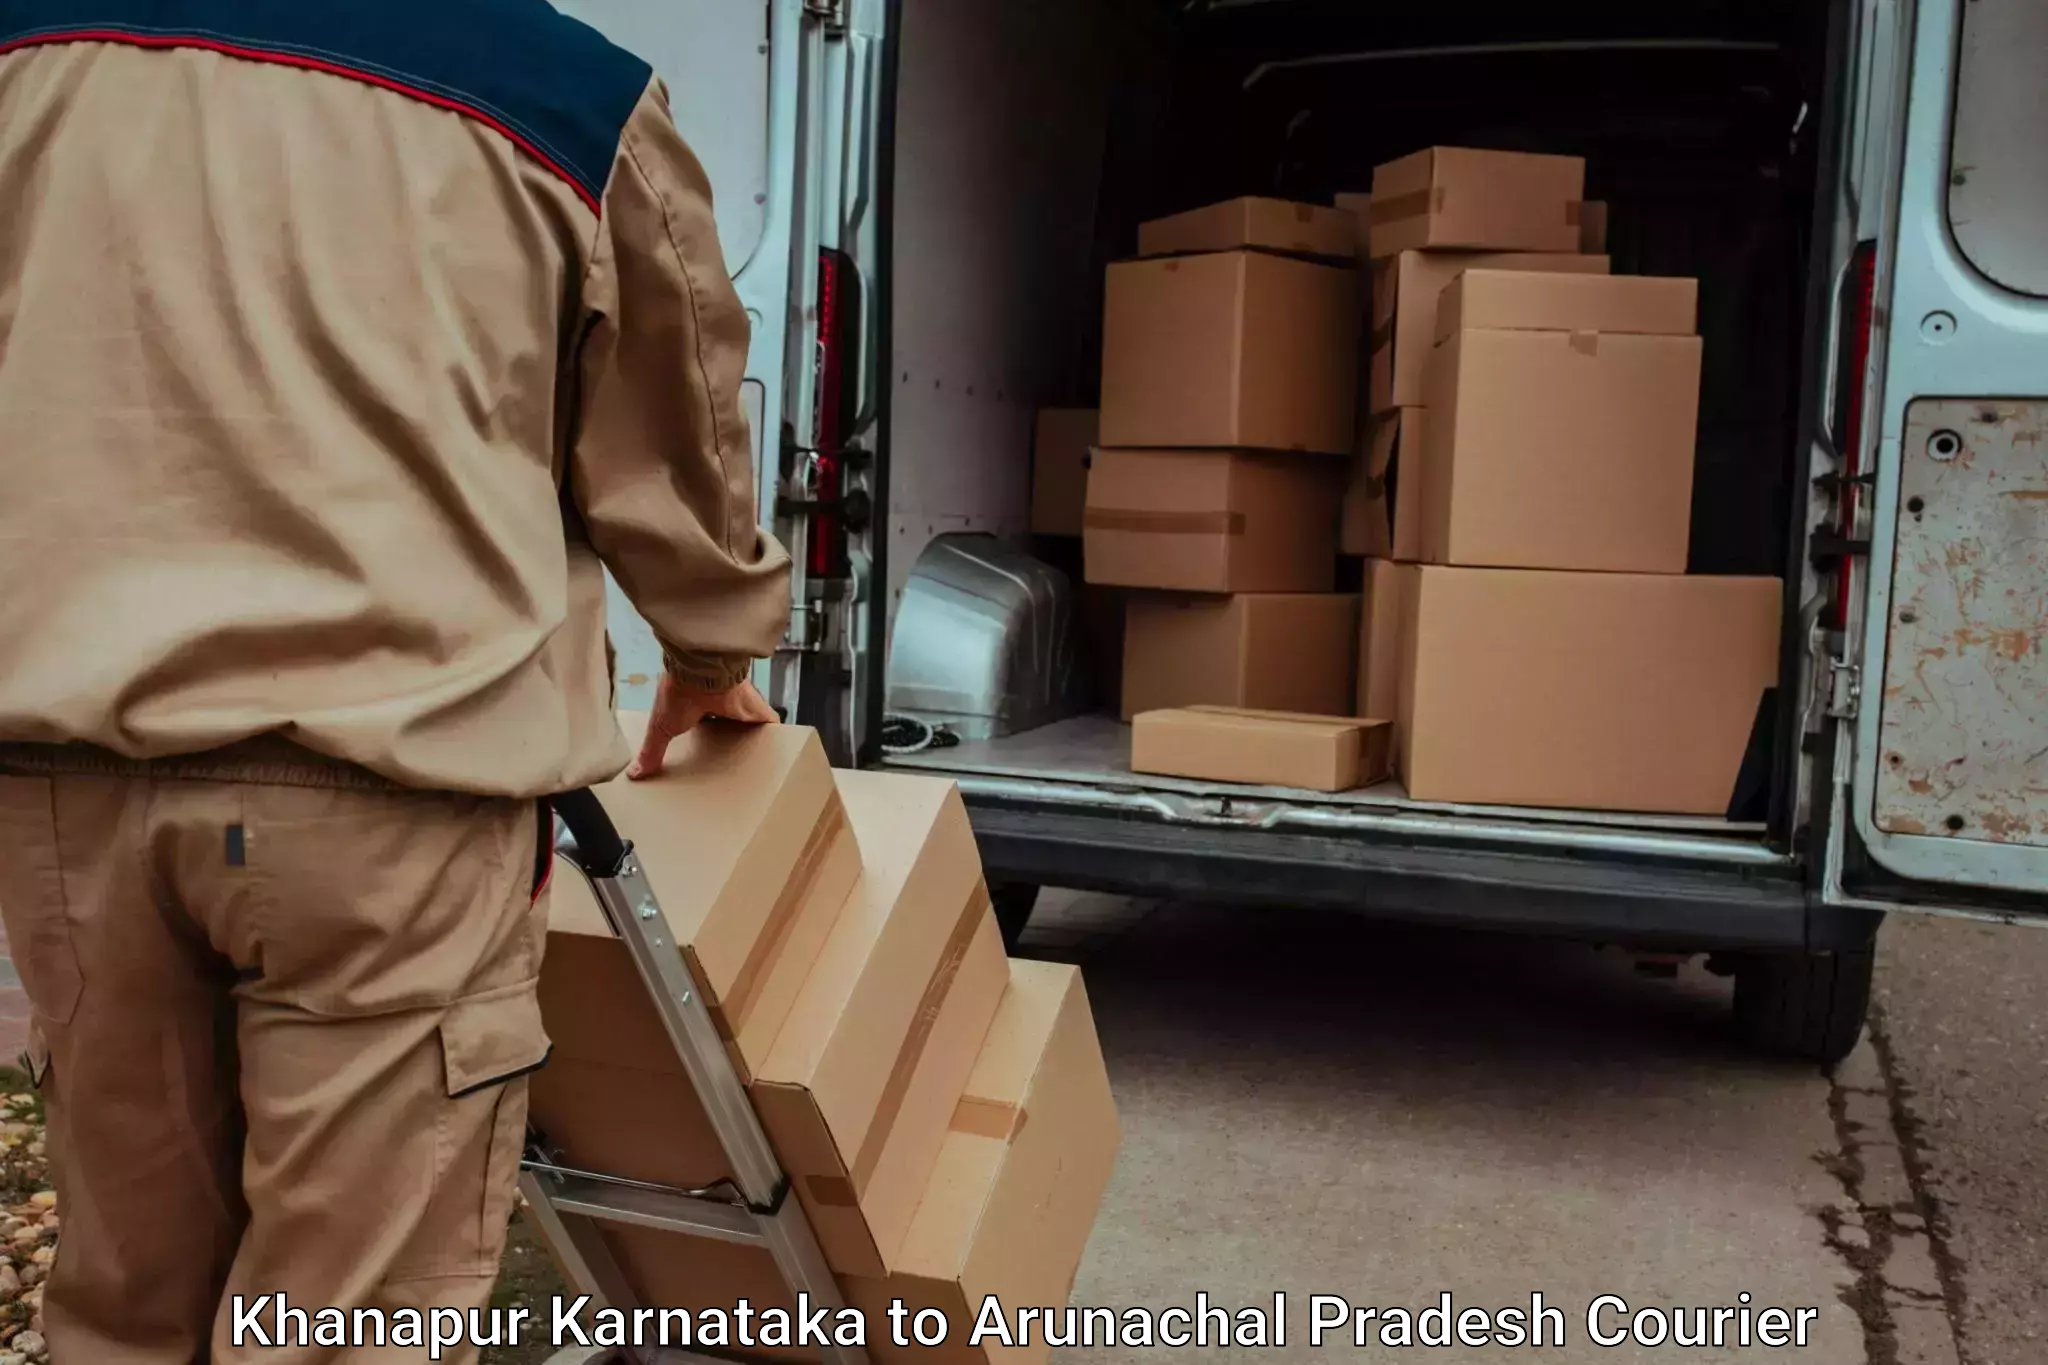 Baggage transport network Khanapur Karnataka to Tezu